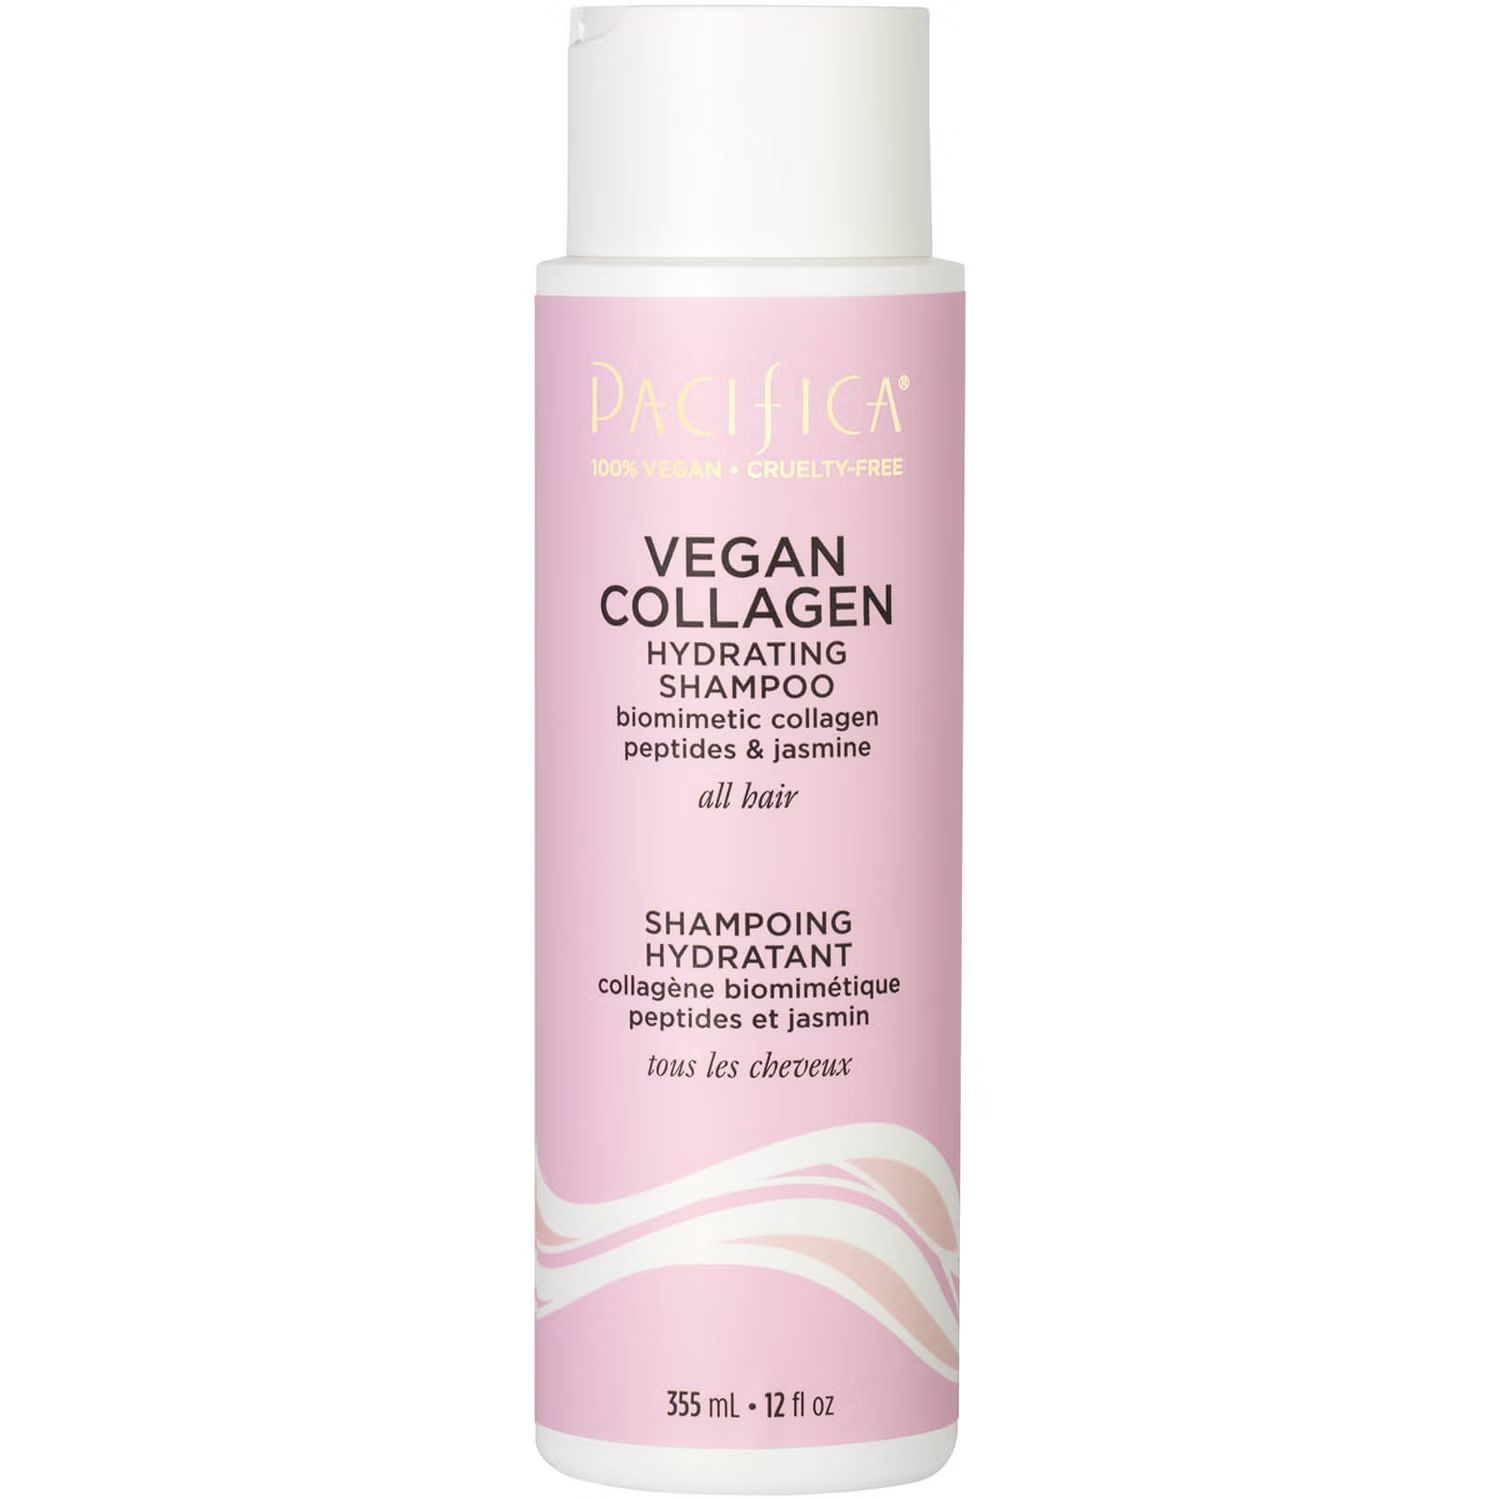 Pacifica Vegan Collagen Hydrating Shampoo 355ml | Cult Beauty